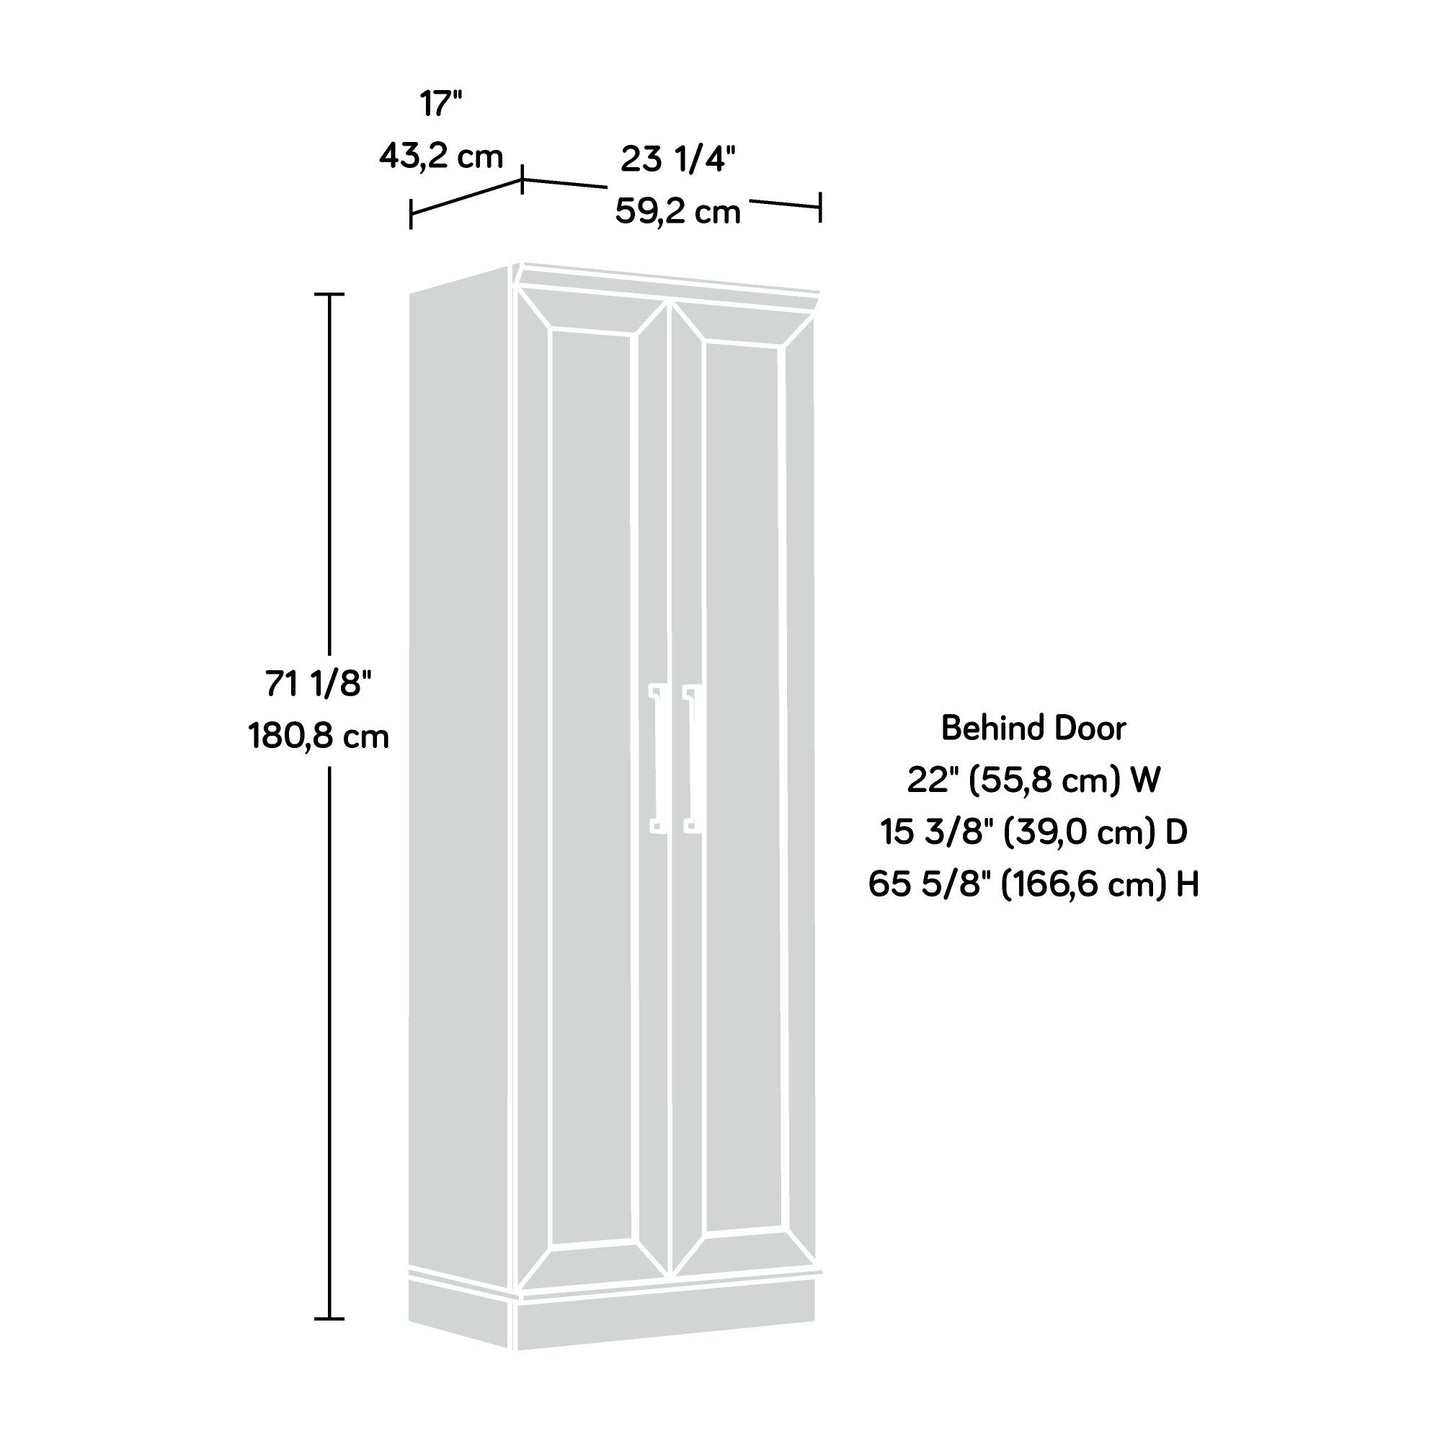 Sauder HomePlus Storage Pantry cabinets, L: 23.31" 17.01" W x H: 70.91", Salt Oak finish